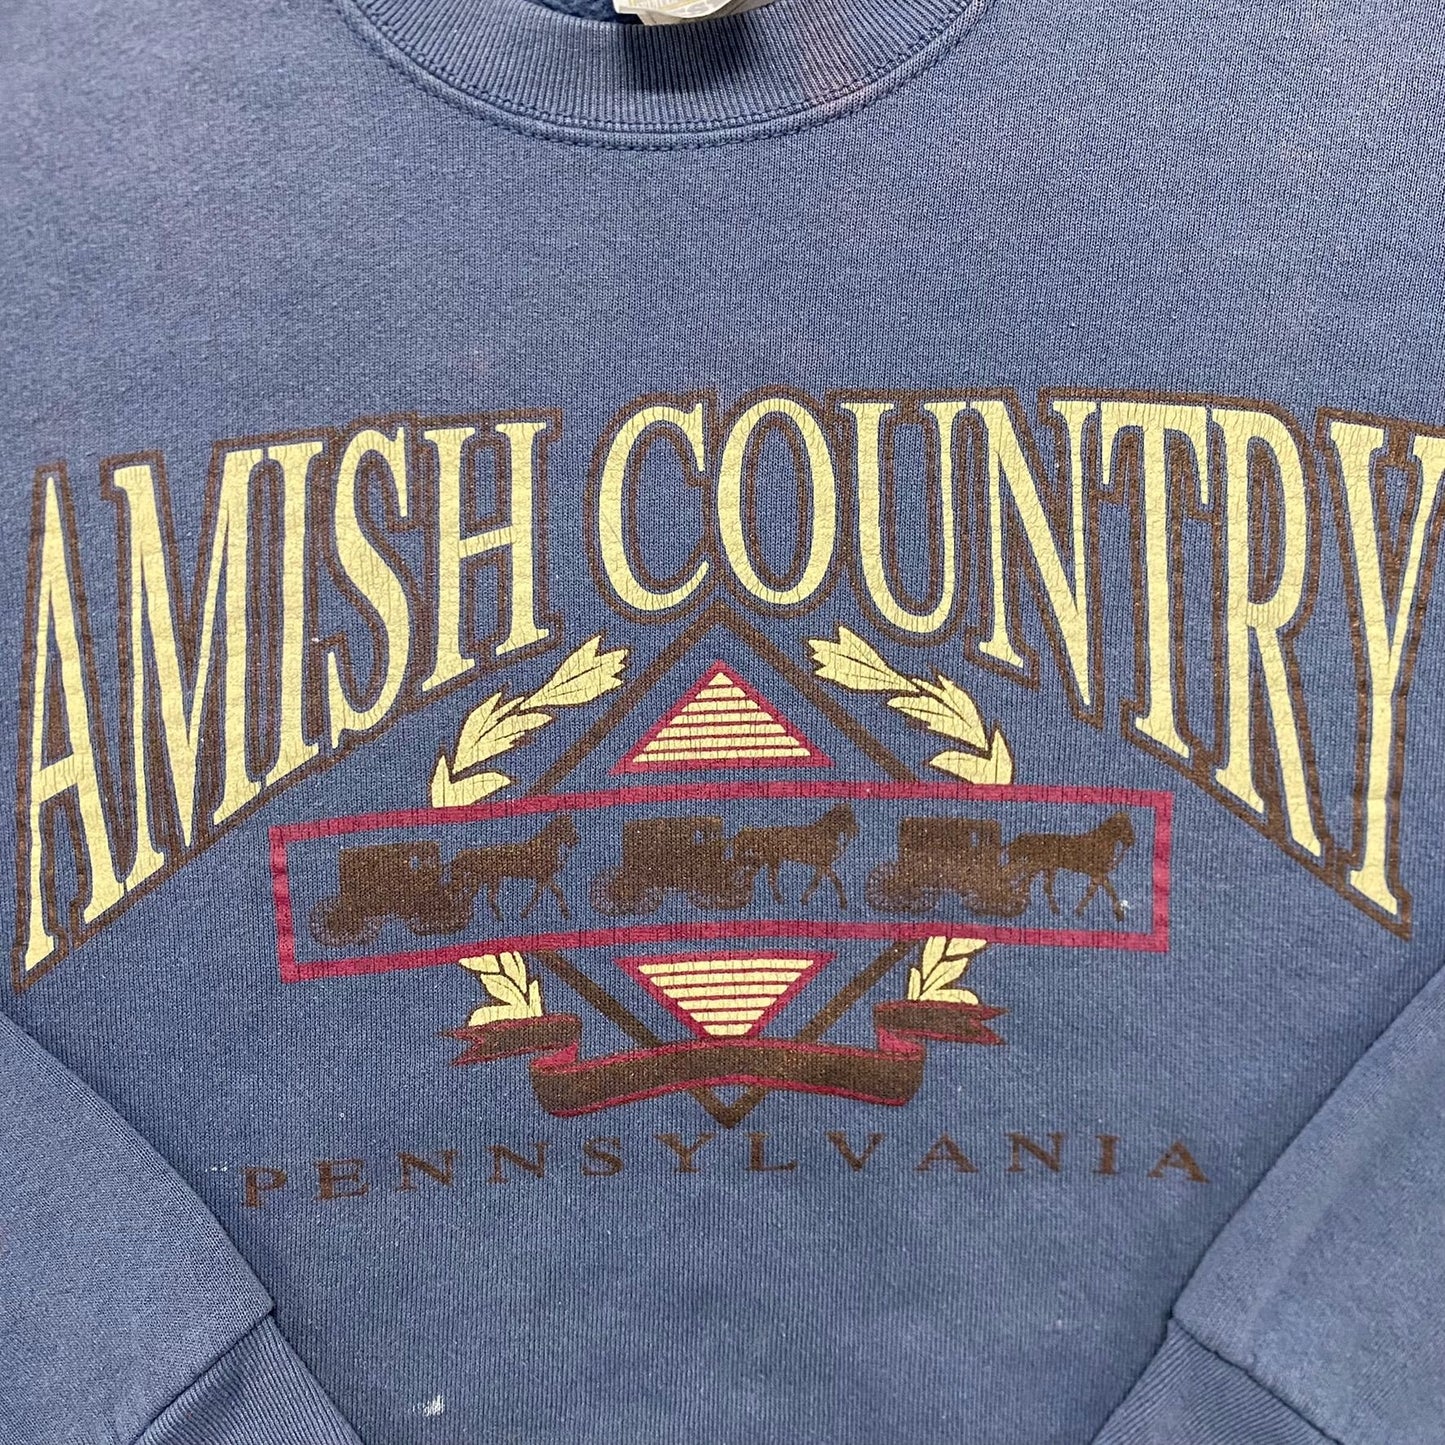 Vintage 90s Amish Country Sun Faded Crewneck Sweatshirt